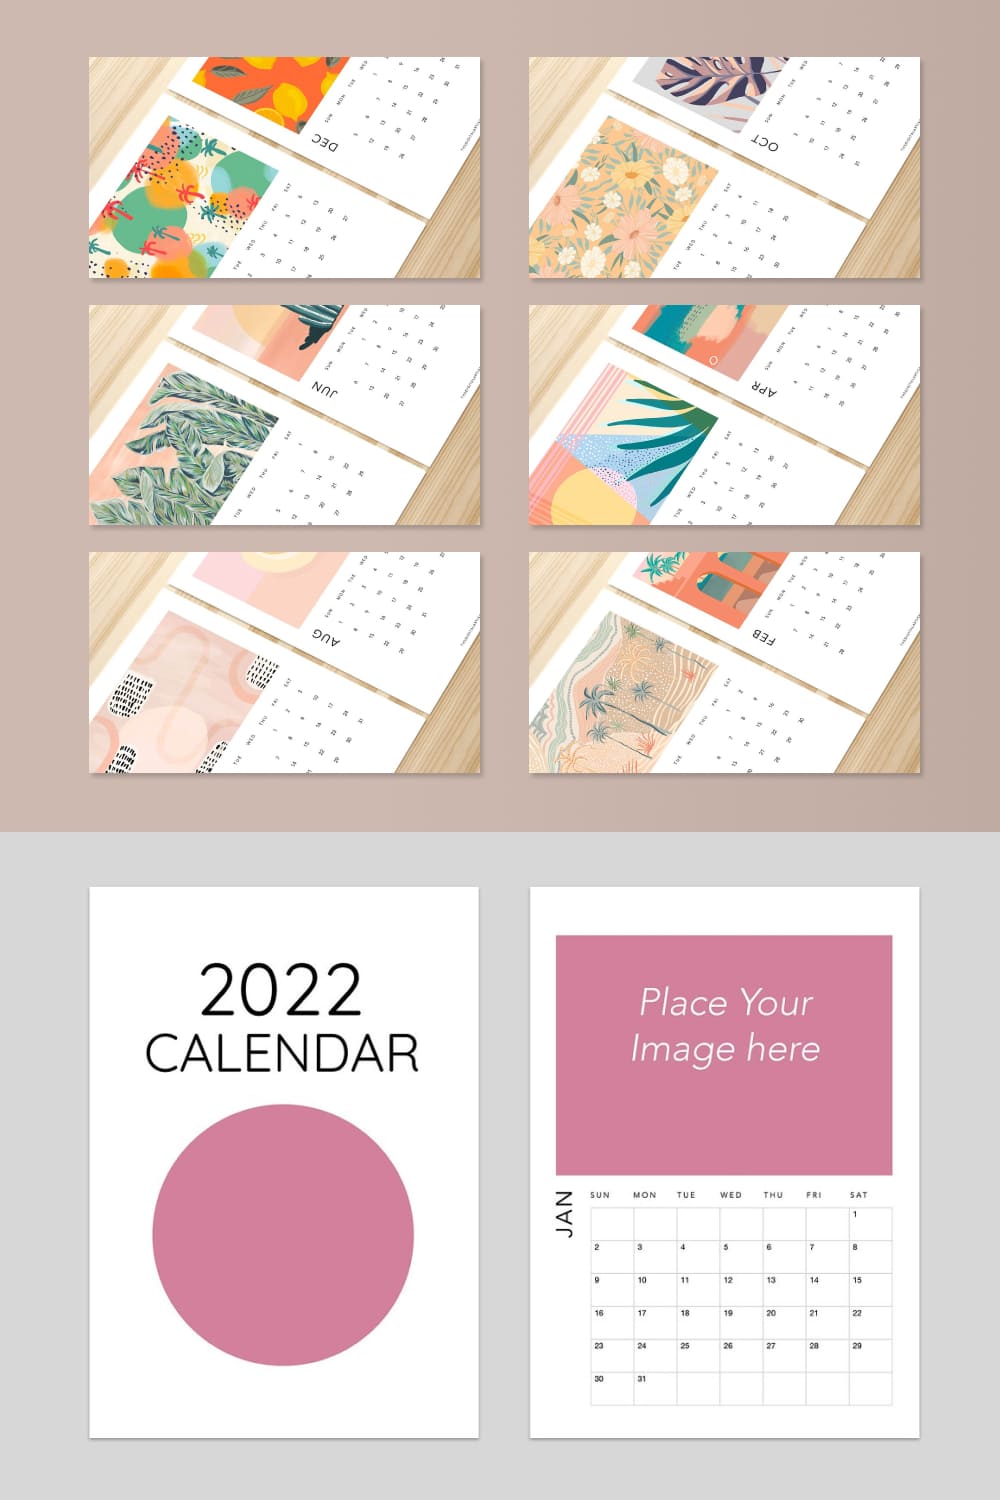 2022 calendar indesign template pinterest image.